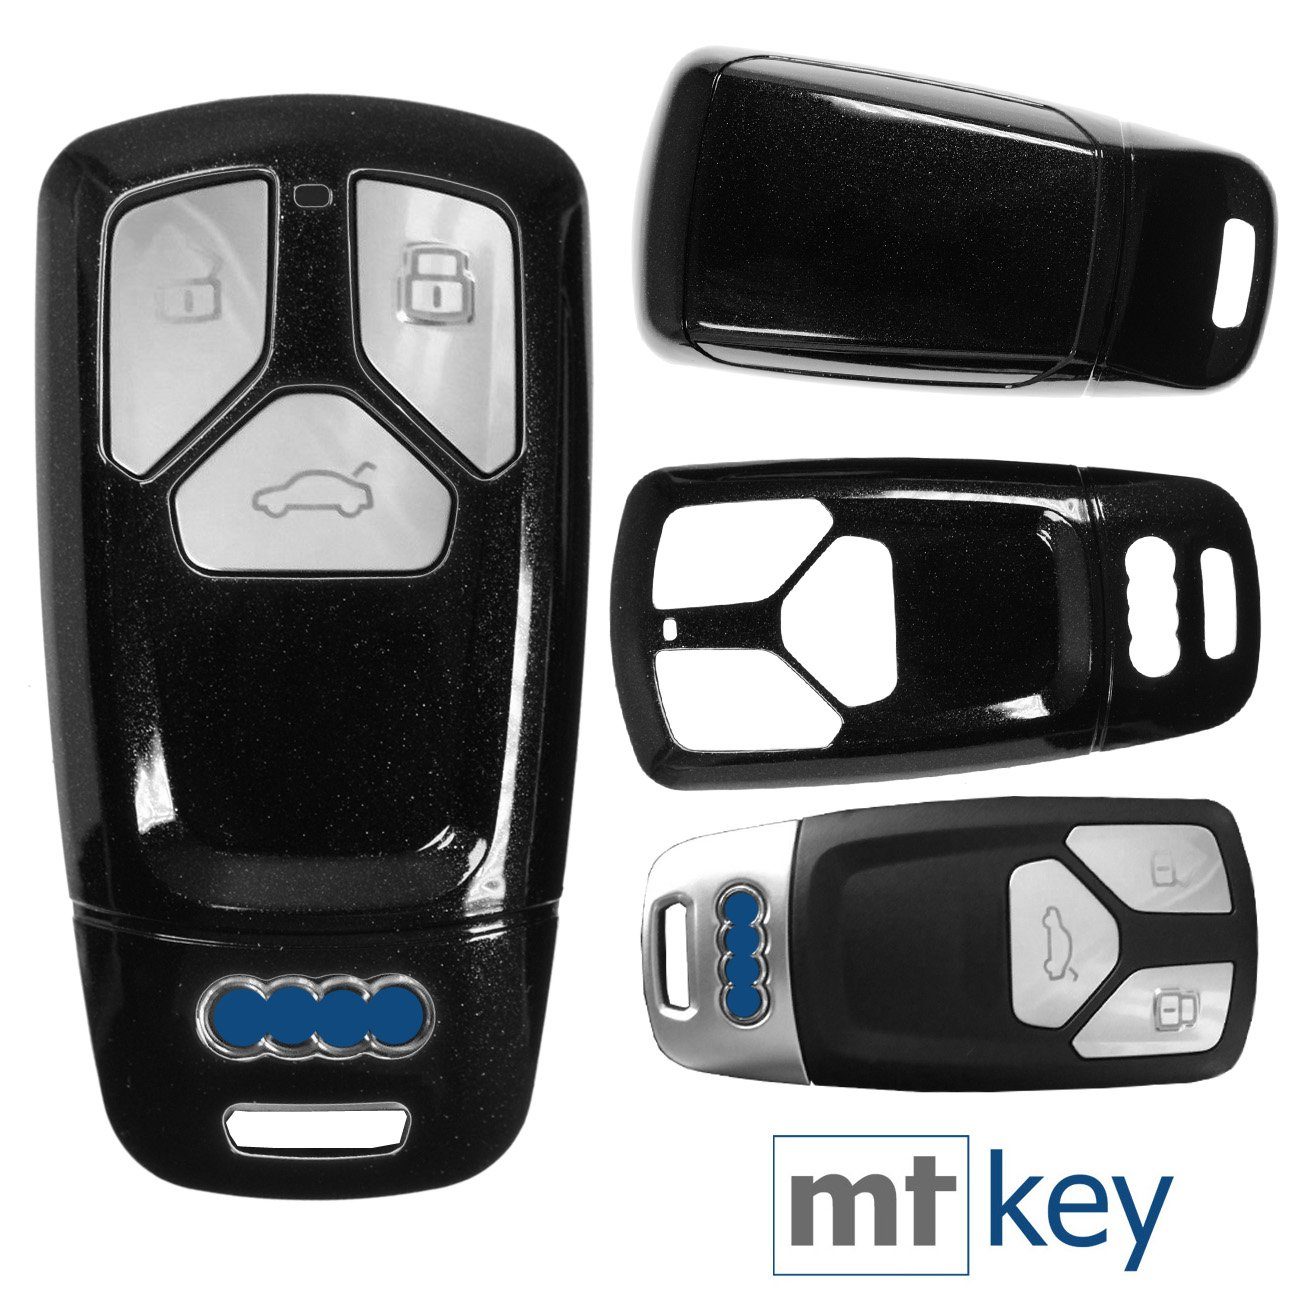 mt-key Schlüsseltasche Autoschlüssel Hardcover Schutzhülle Metallic Schwarz, für Audi A4 A5 A6 A7 TT Q2 Q5 Q7 A8 Q8 KEYLESS SMARTKEY